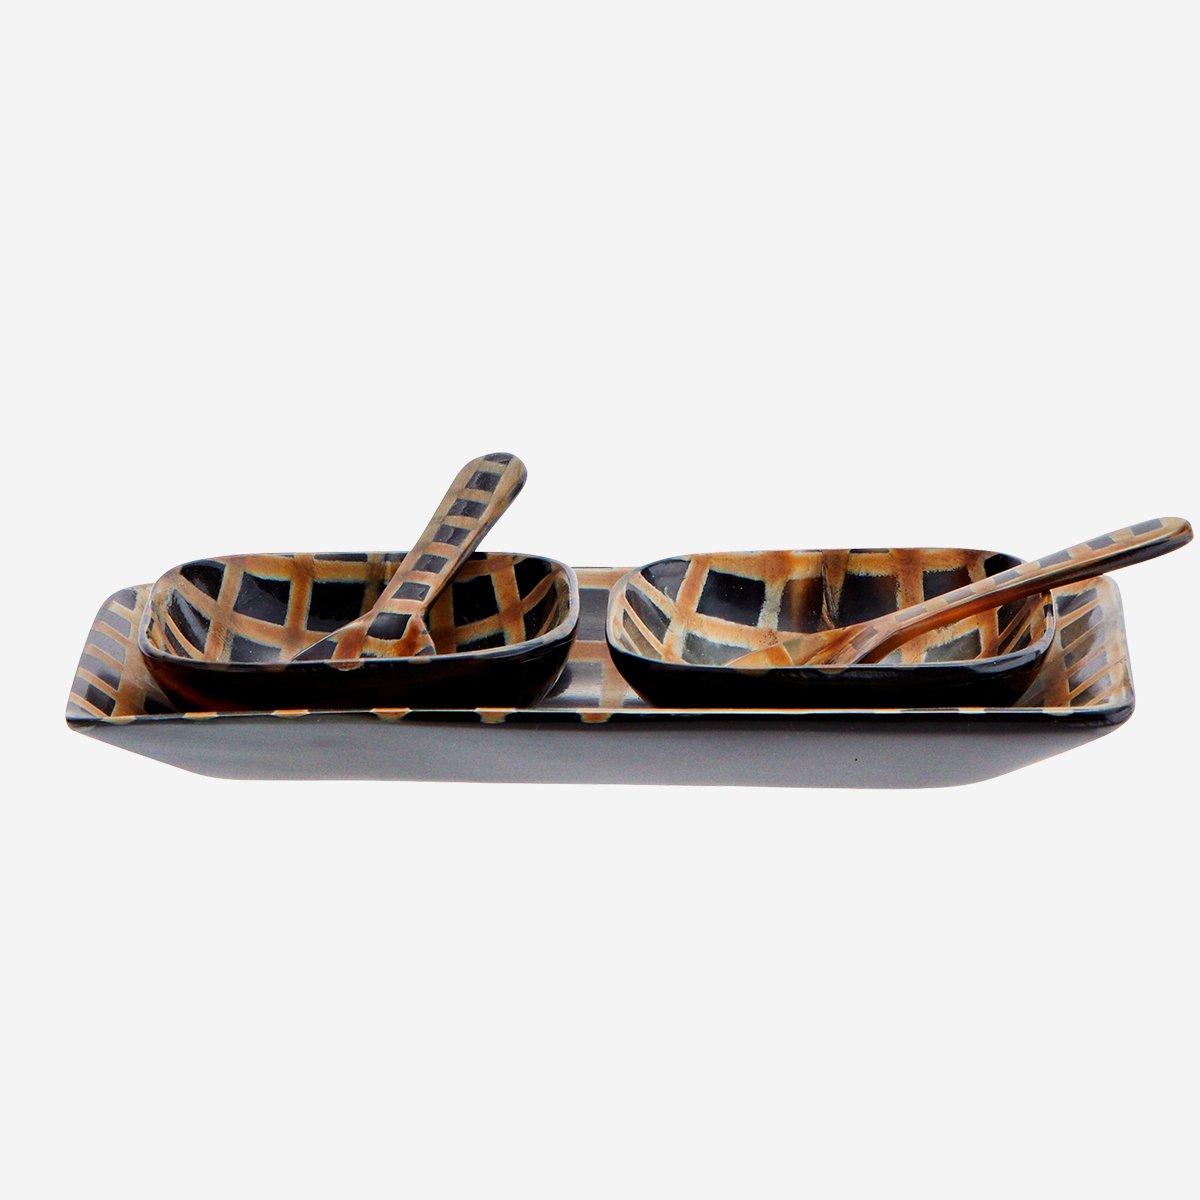 Horn tray with spoons and bowls - Natalia Willmott